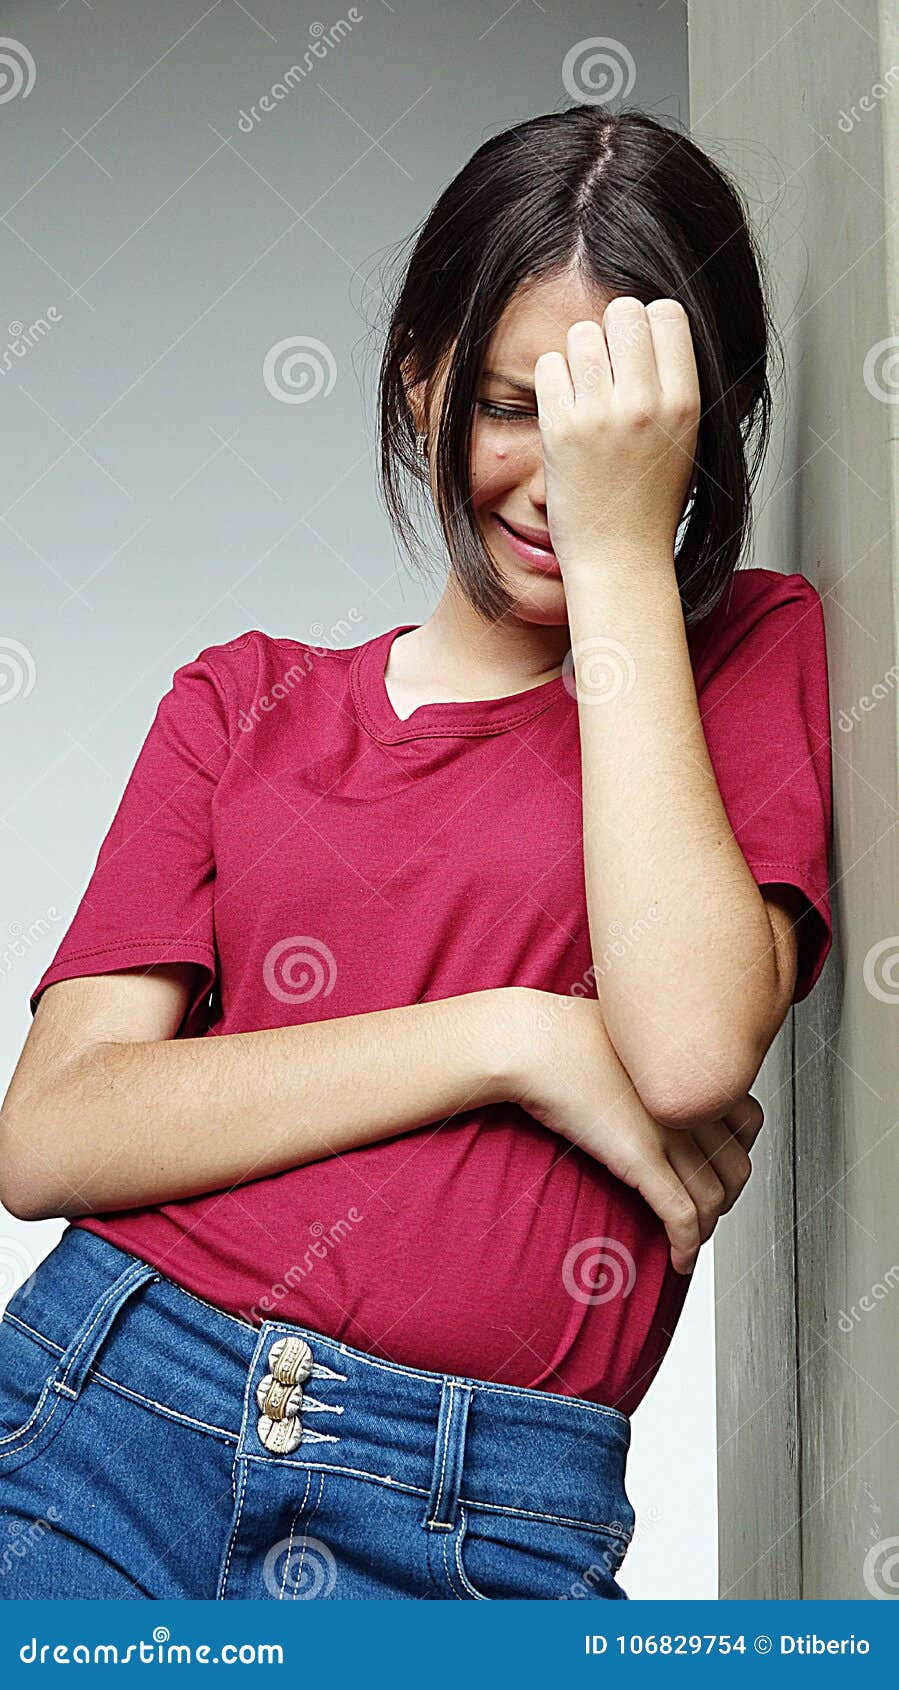 Small body crying latina girl learning photo